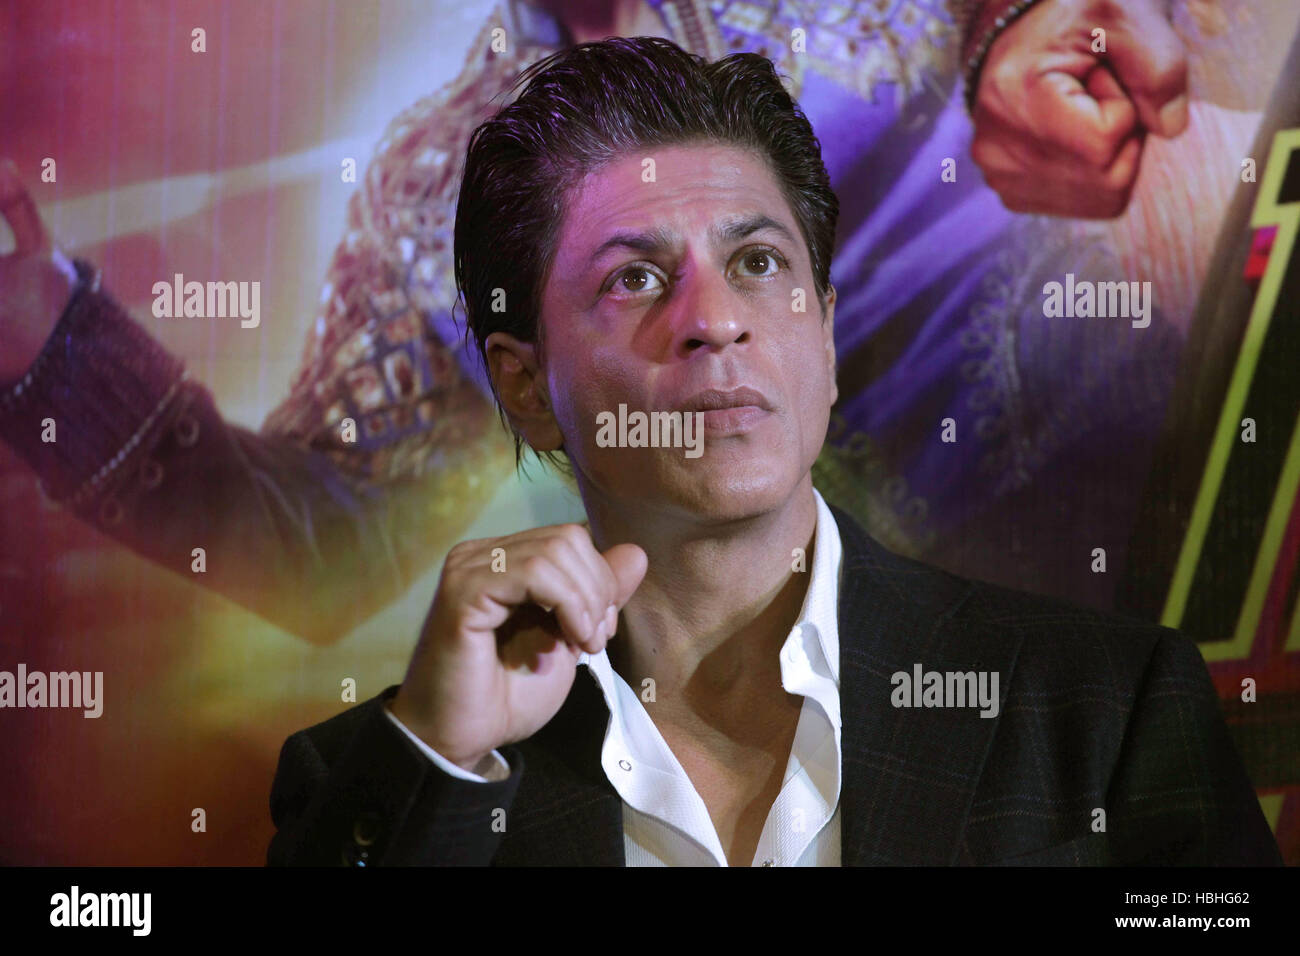 Shahrukh Khan portrait, Indian Bollywood actor, white shirt, black jacket, at promotion of film Happy New Year in Ahmedabad, India Stock Photo